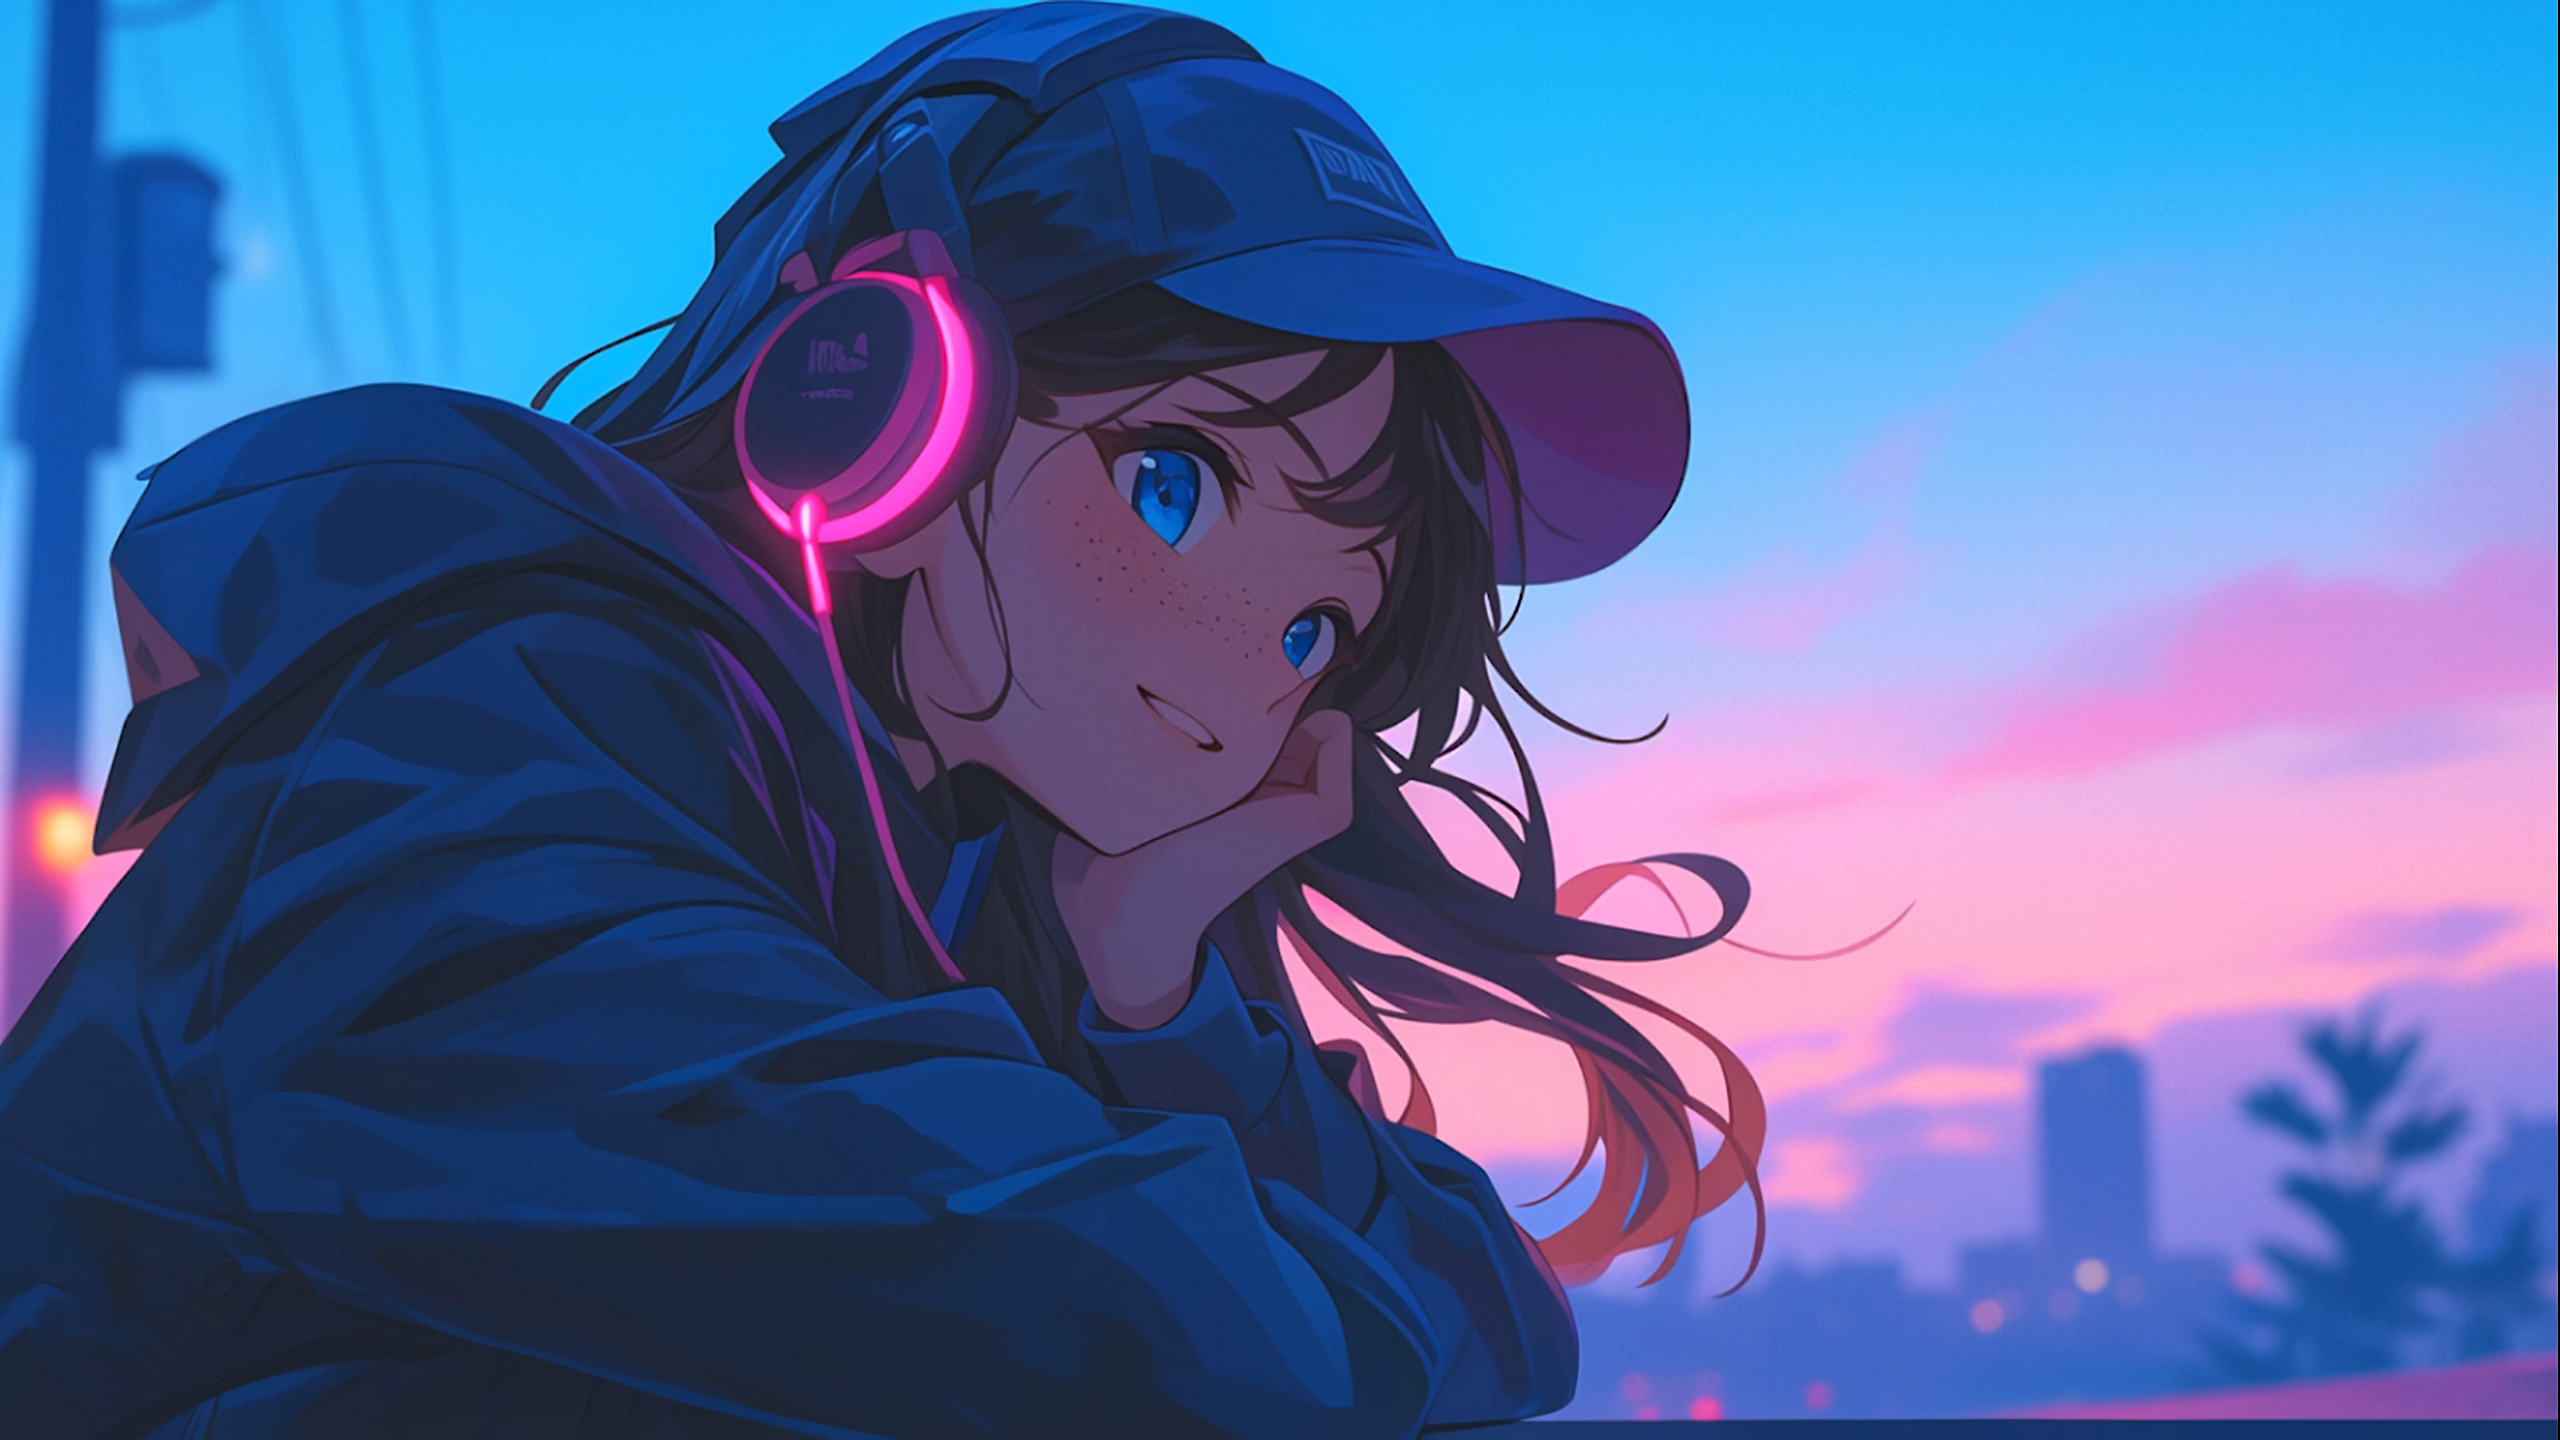 Anime 2560x1440 anime girls headphones minimalism sketches Chillhop Music music smiling Pink (artist) hat kid AI art